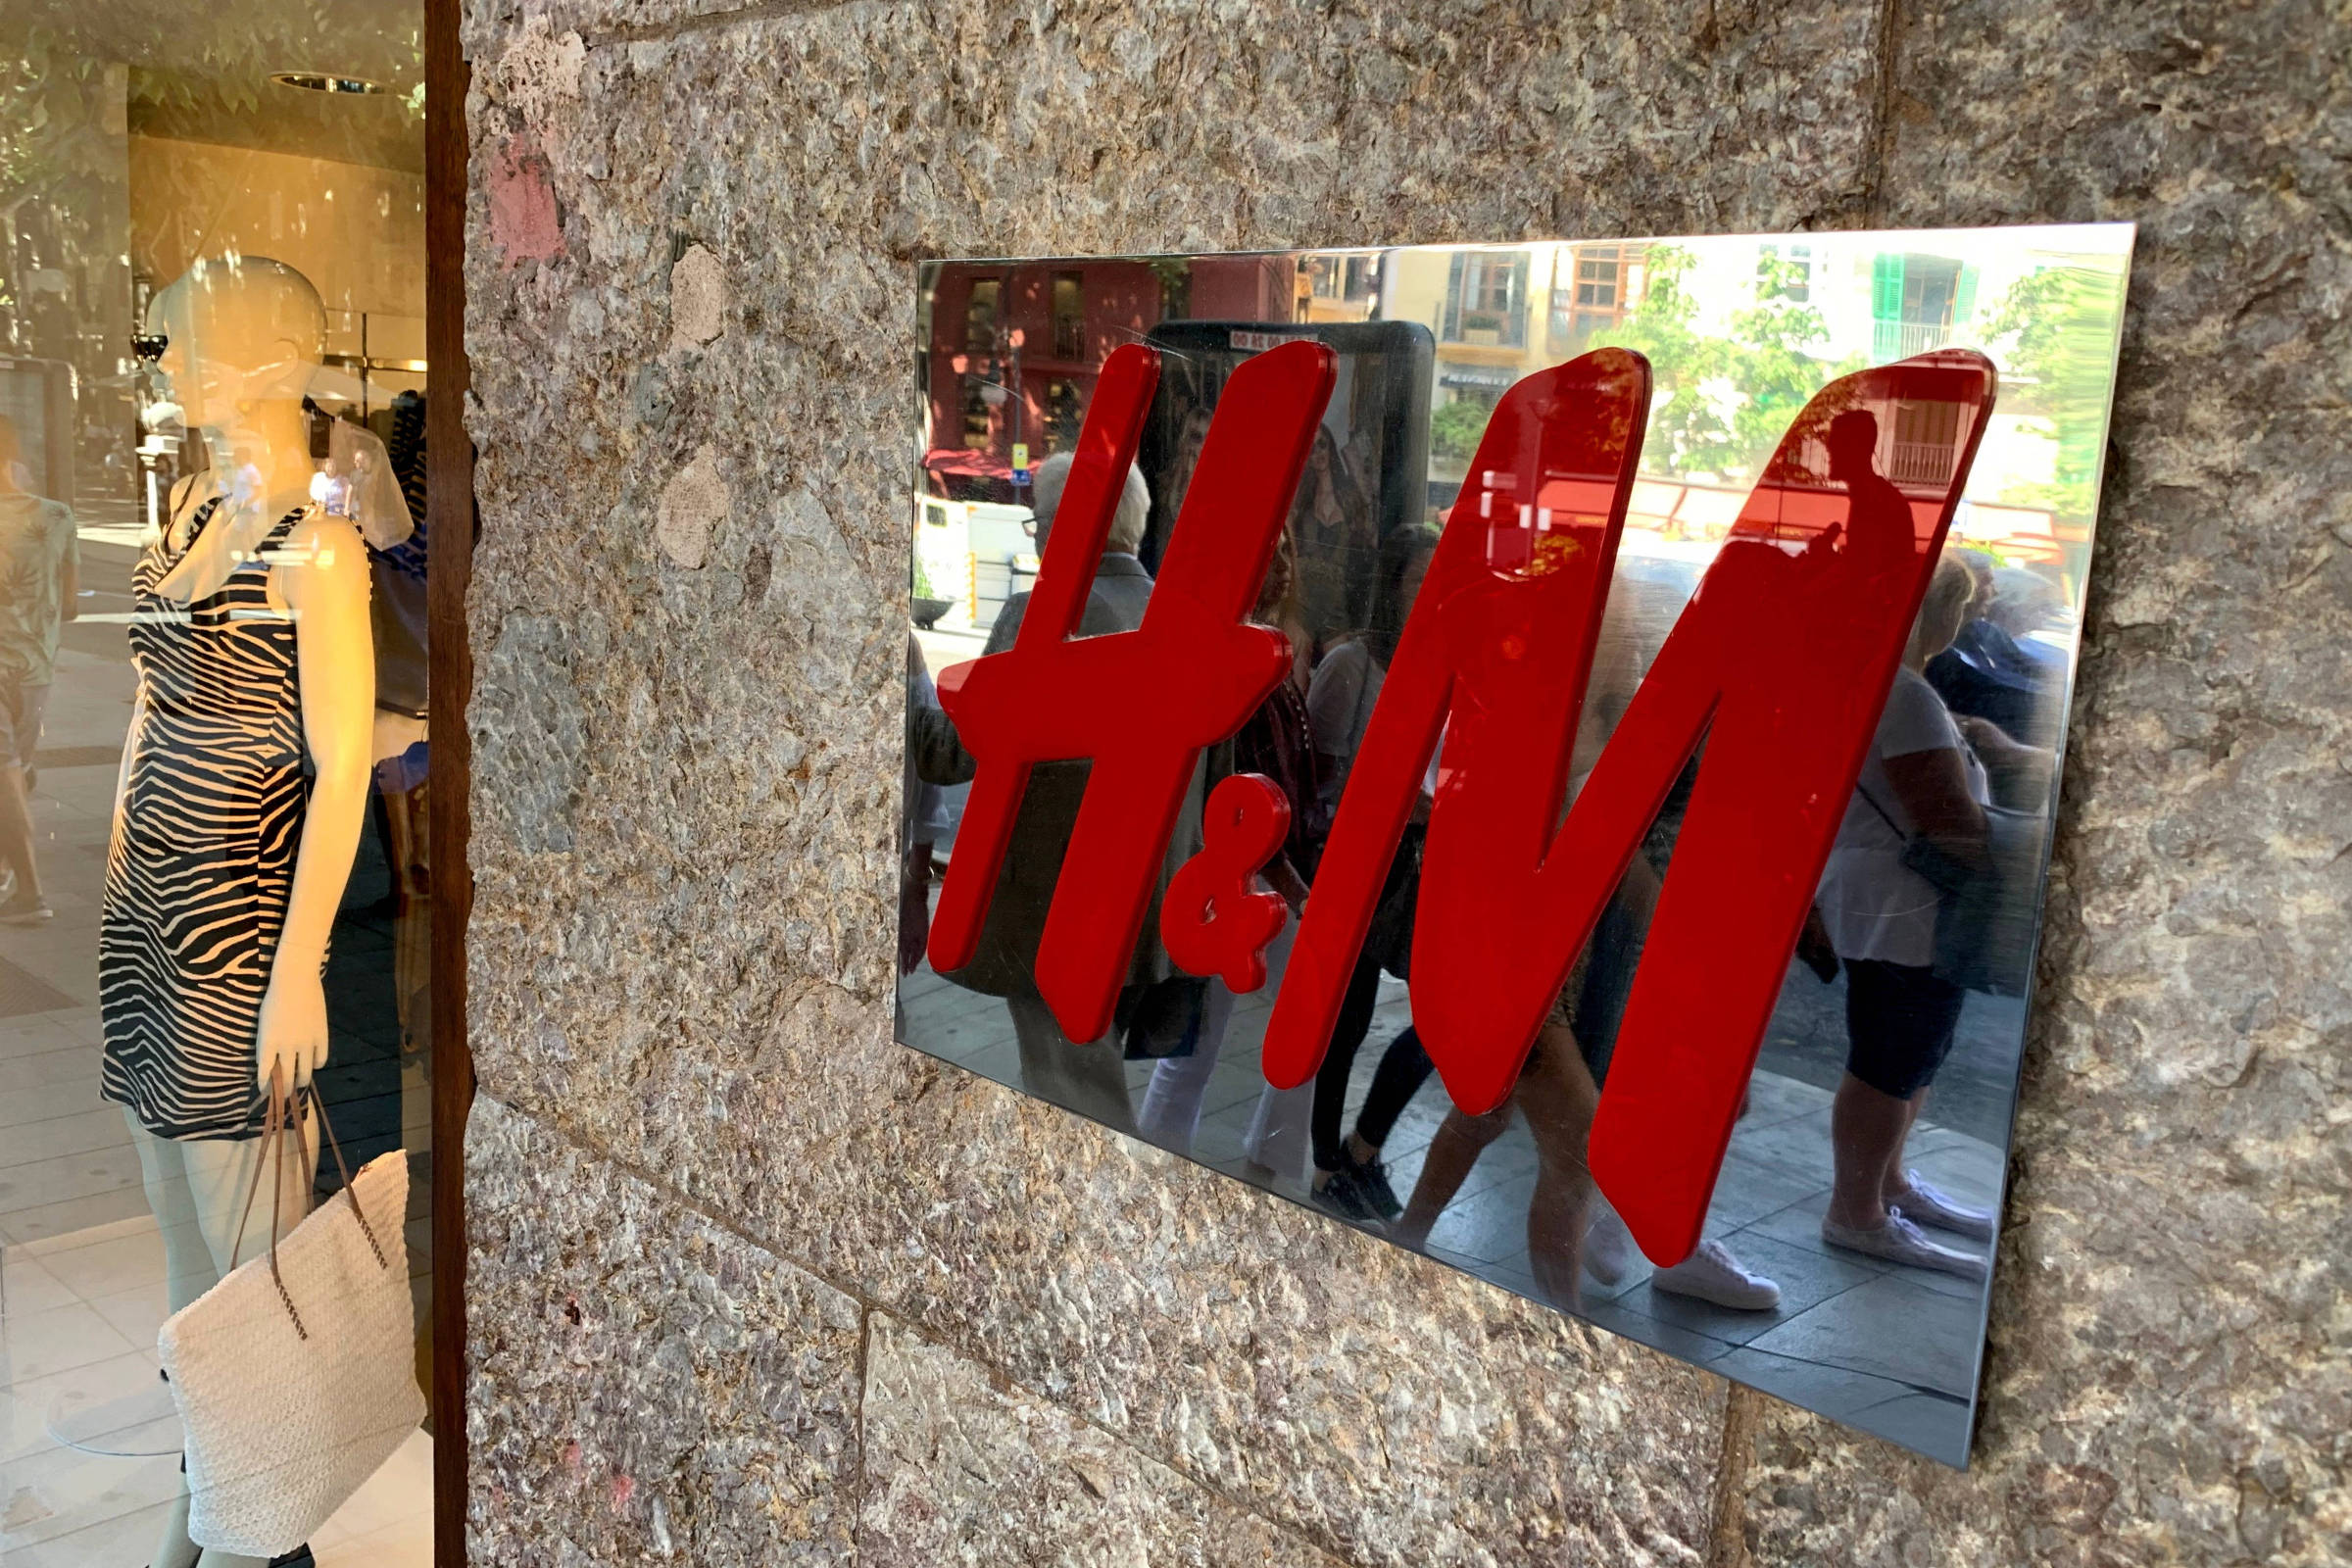 Varejista europeia, H&M vai desembarcar no Brasil em 2025